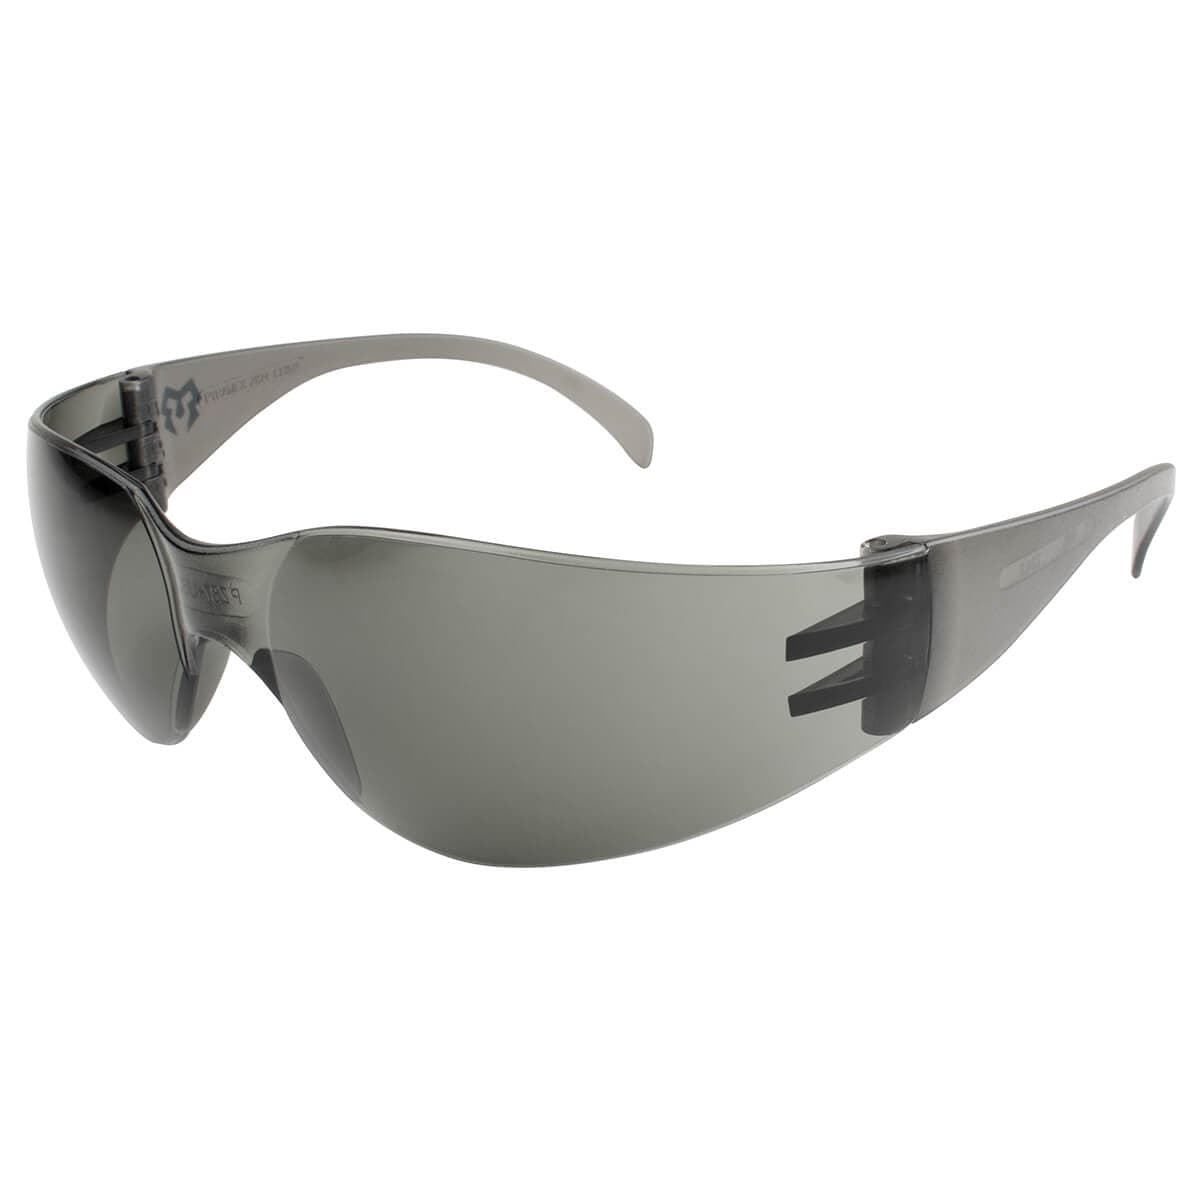 METEL M10 Safety Glasses Ultra-lightweight, Economical, Multiple Lens Options